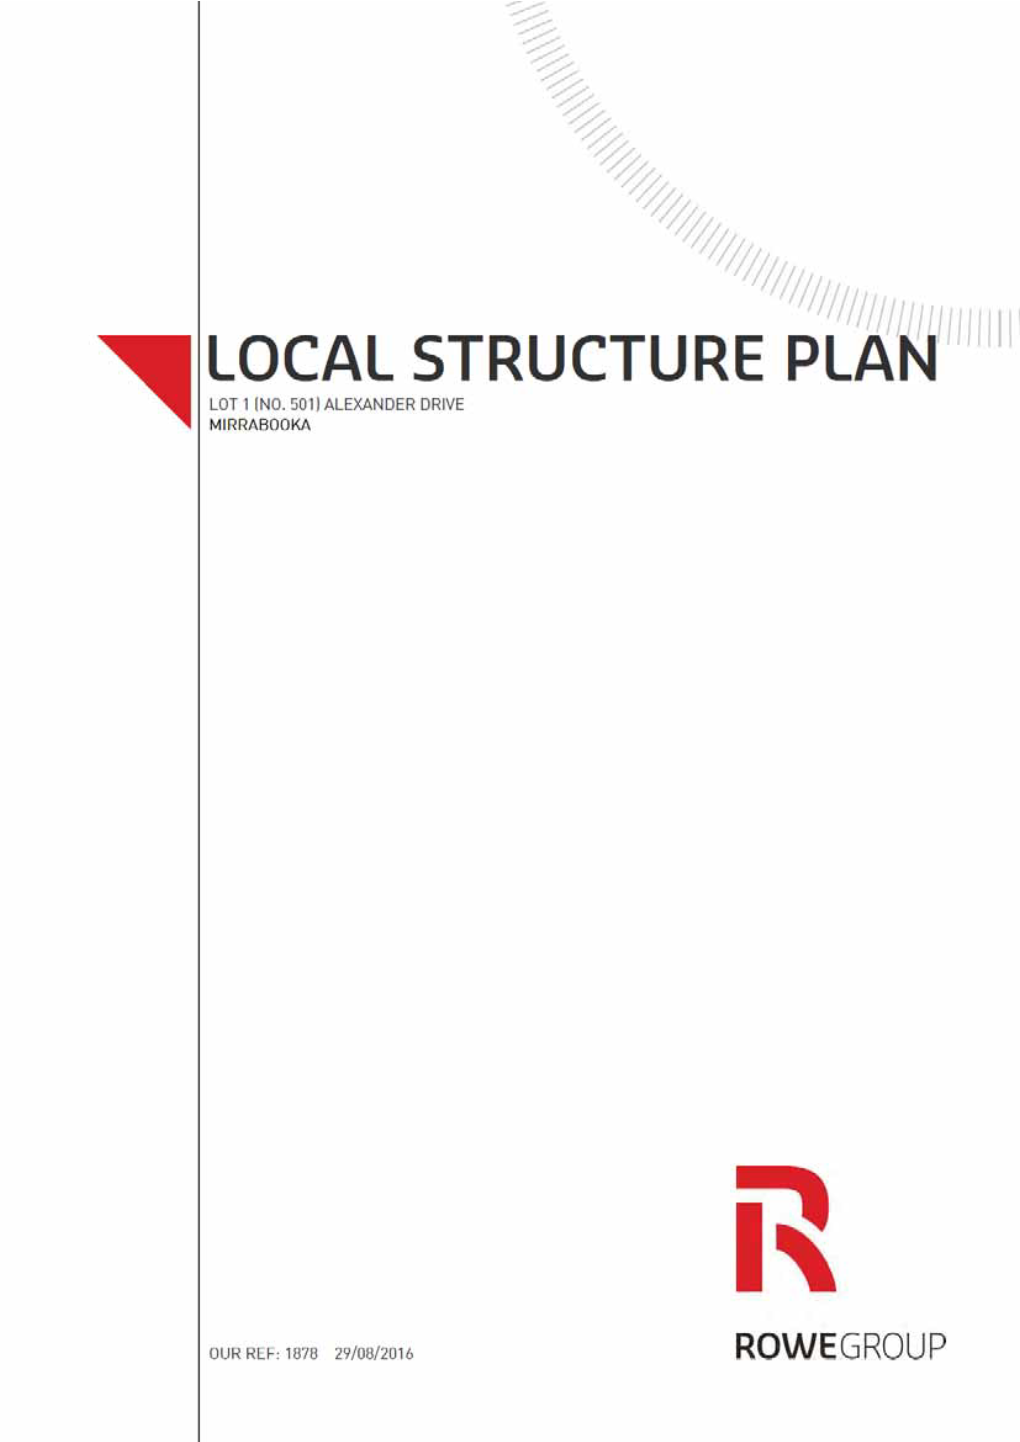 Lot 1 Alexander Drive Mirrabooka Structure Plan WAPC Ref STIR-2016